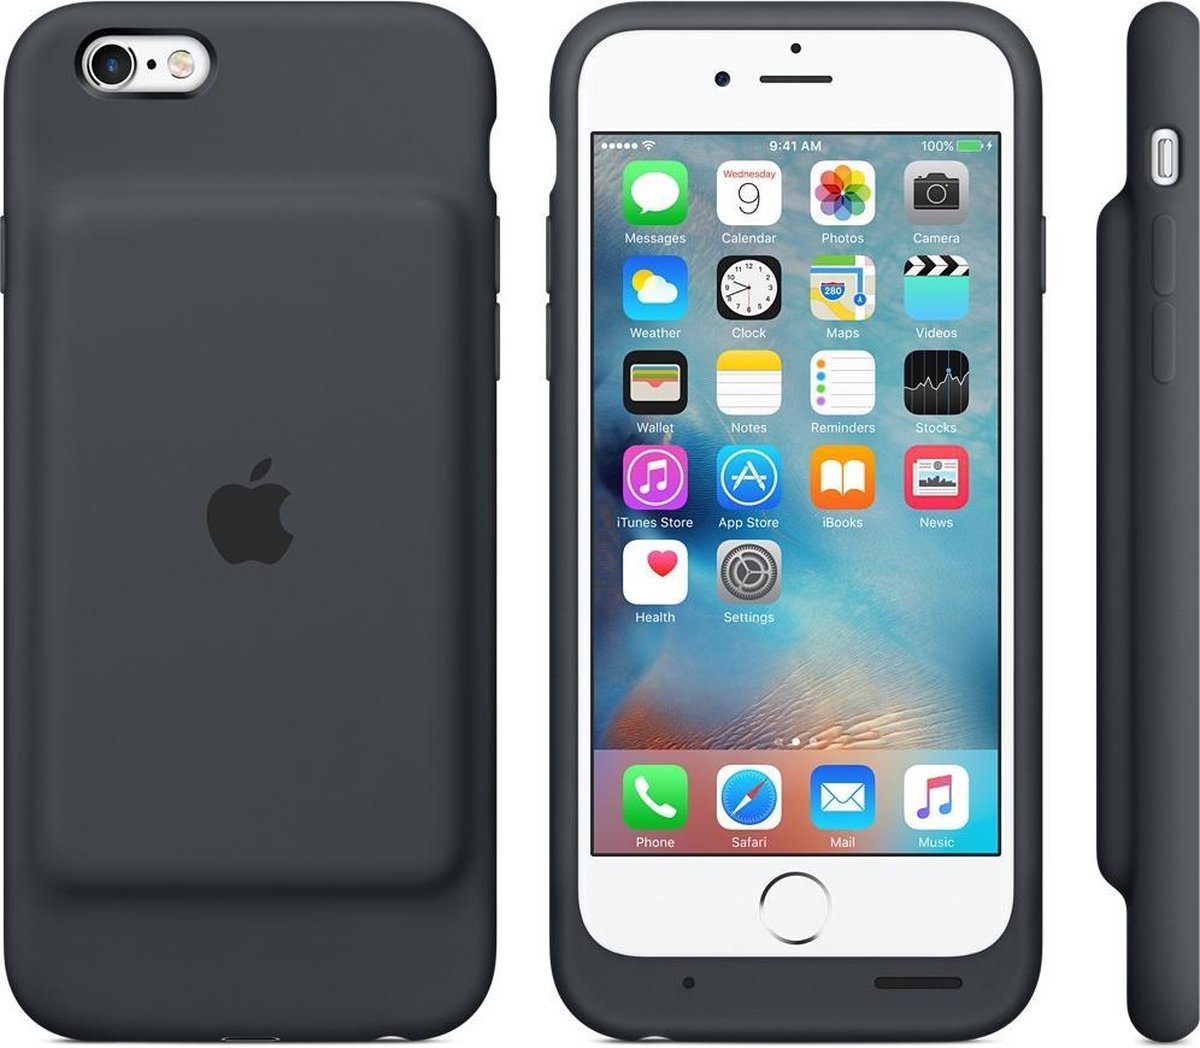 Postcode matig zegevierend Apple iPhone 6/6S Smart Battery Case Charcoal Grey | bol.com